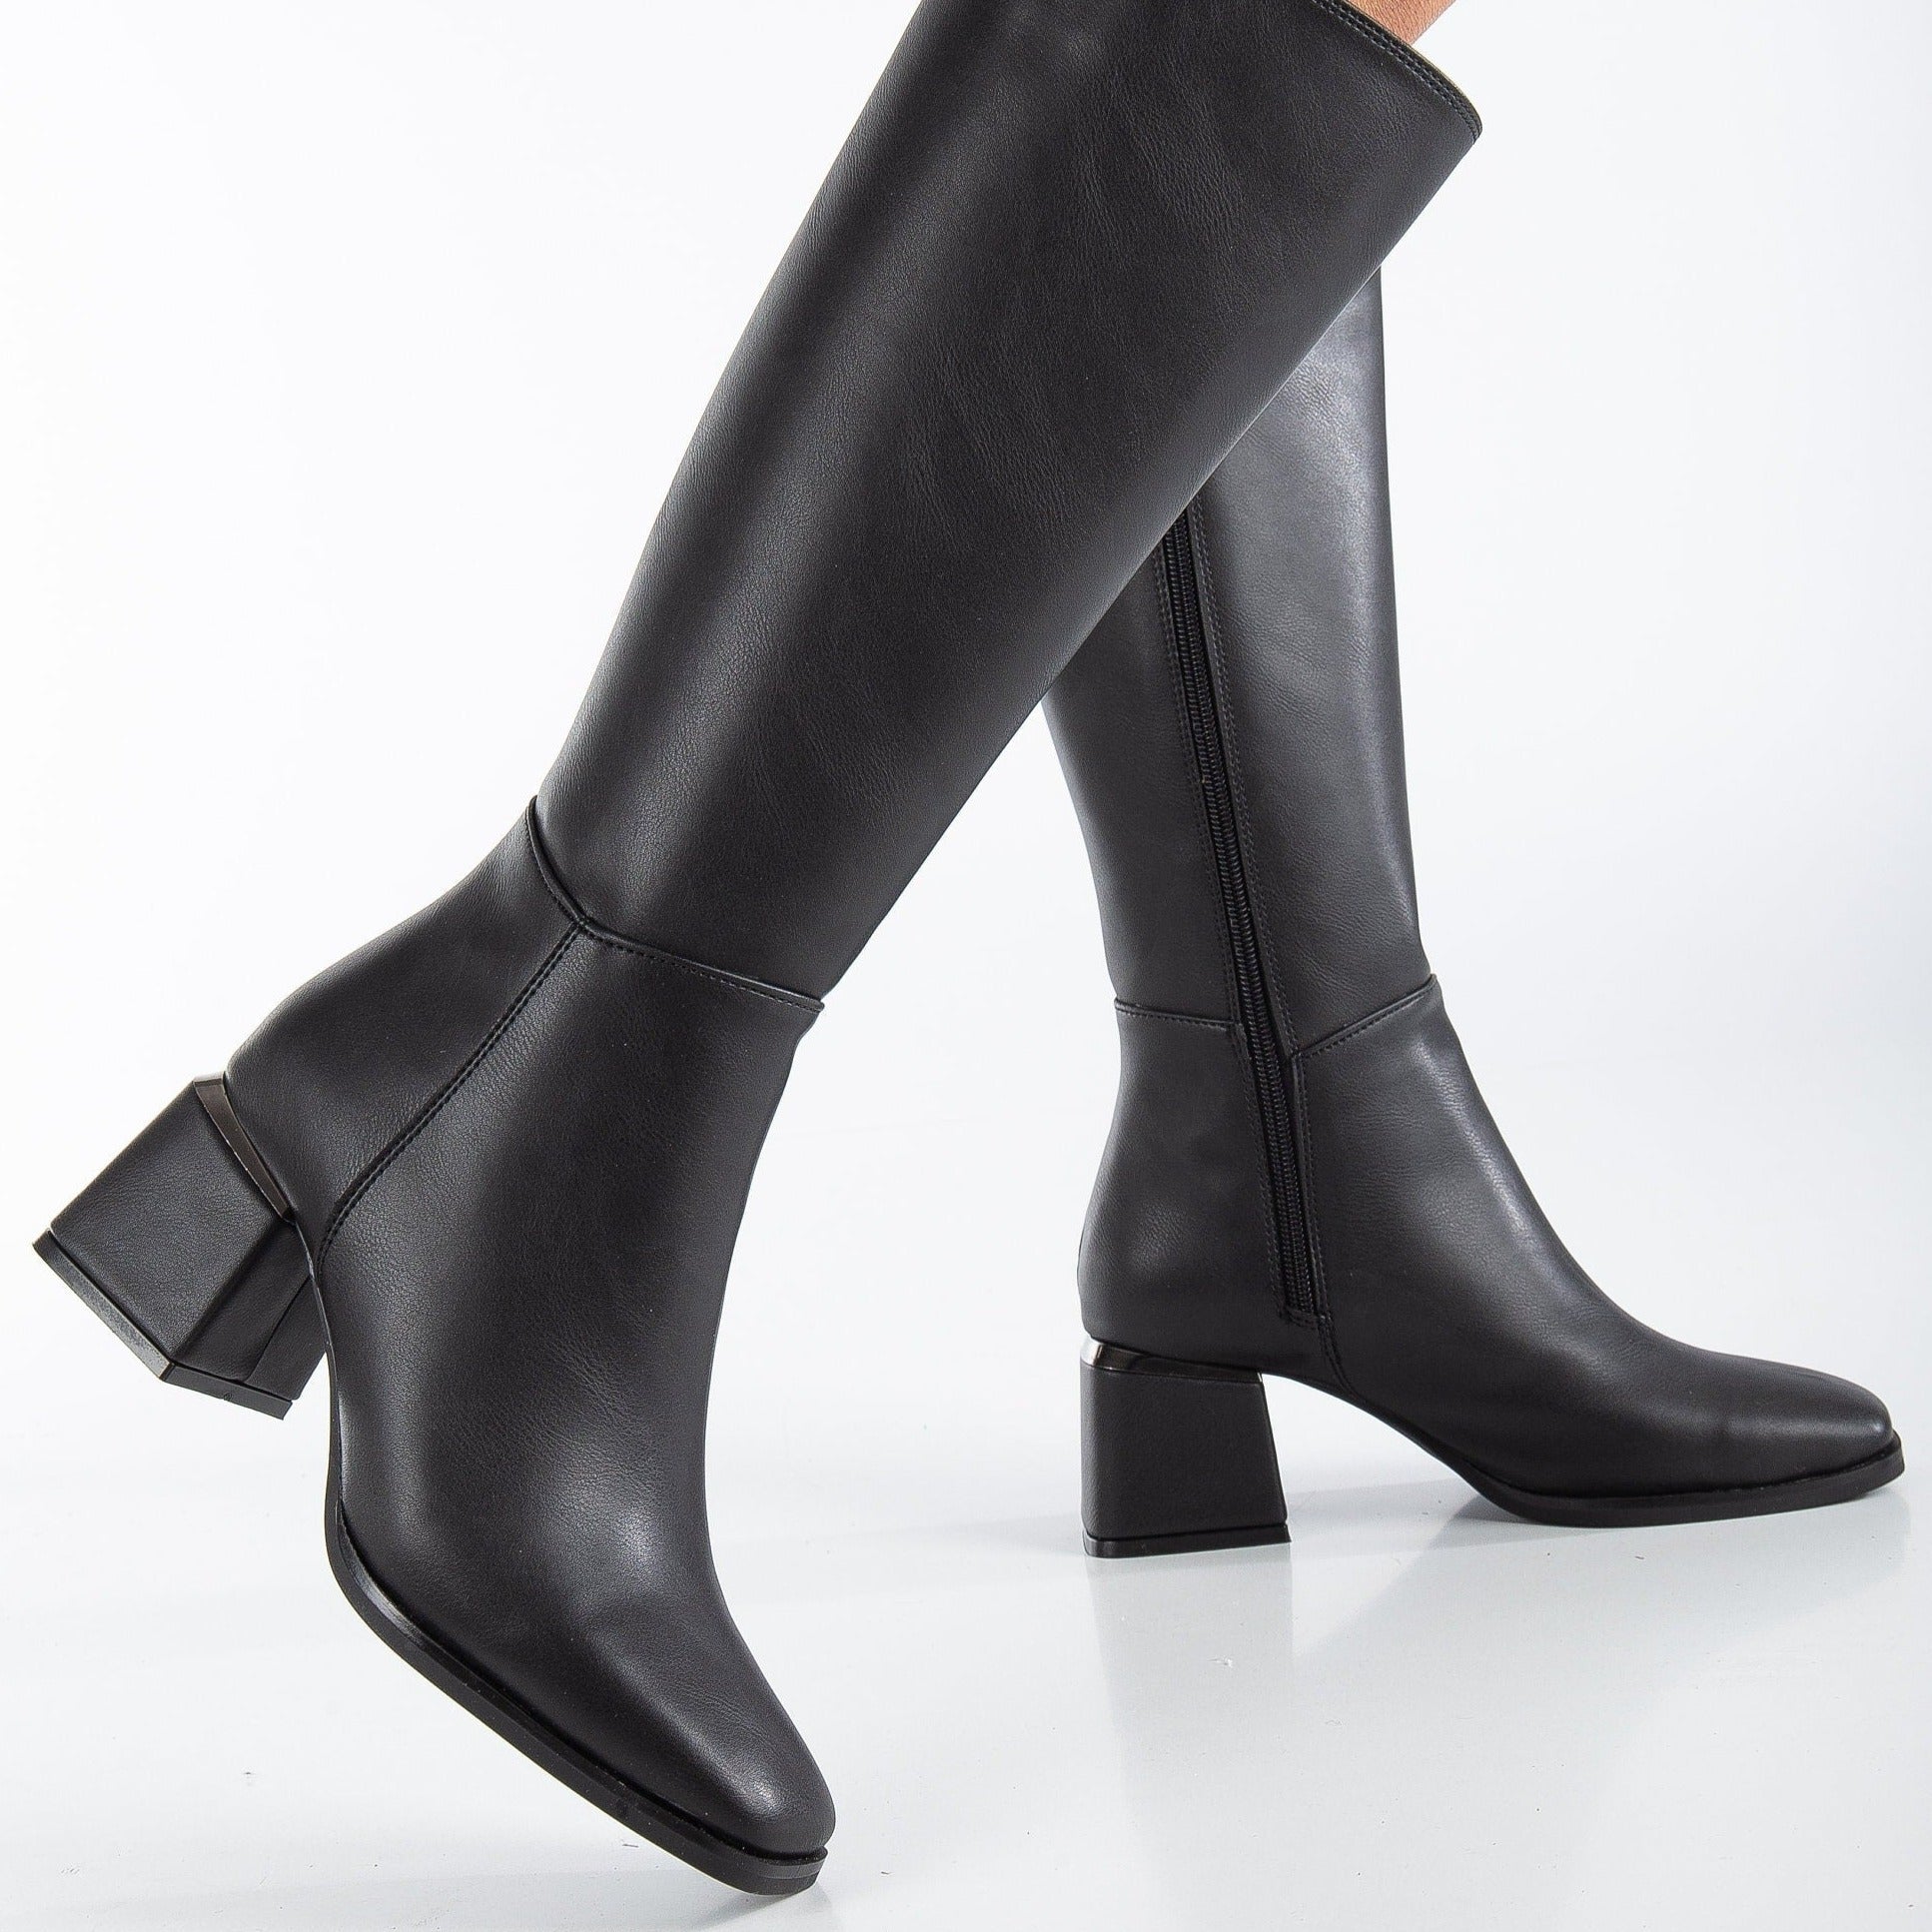 Anelise - Black Knee High Boots